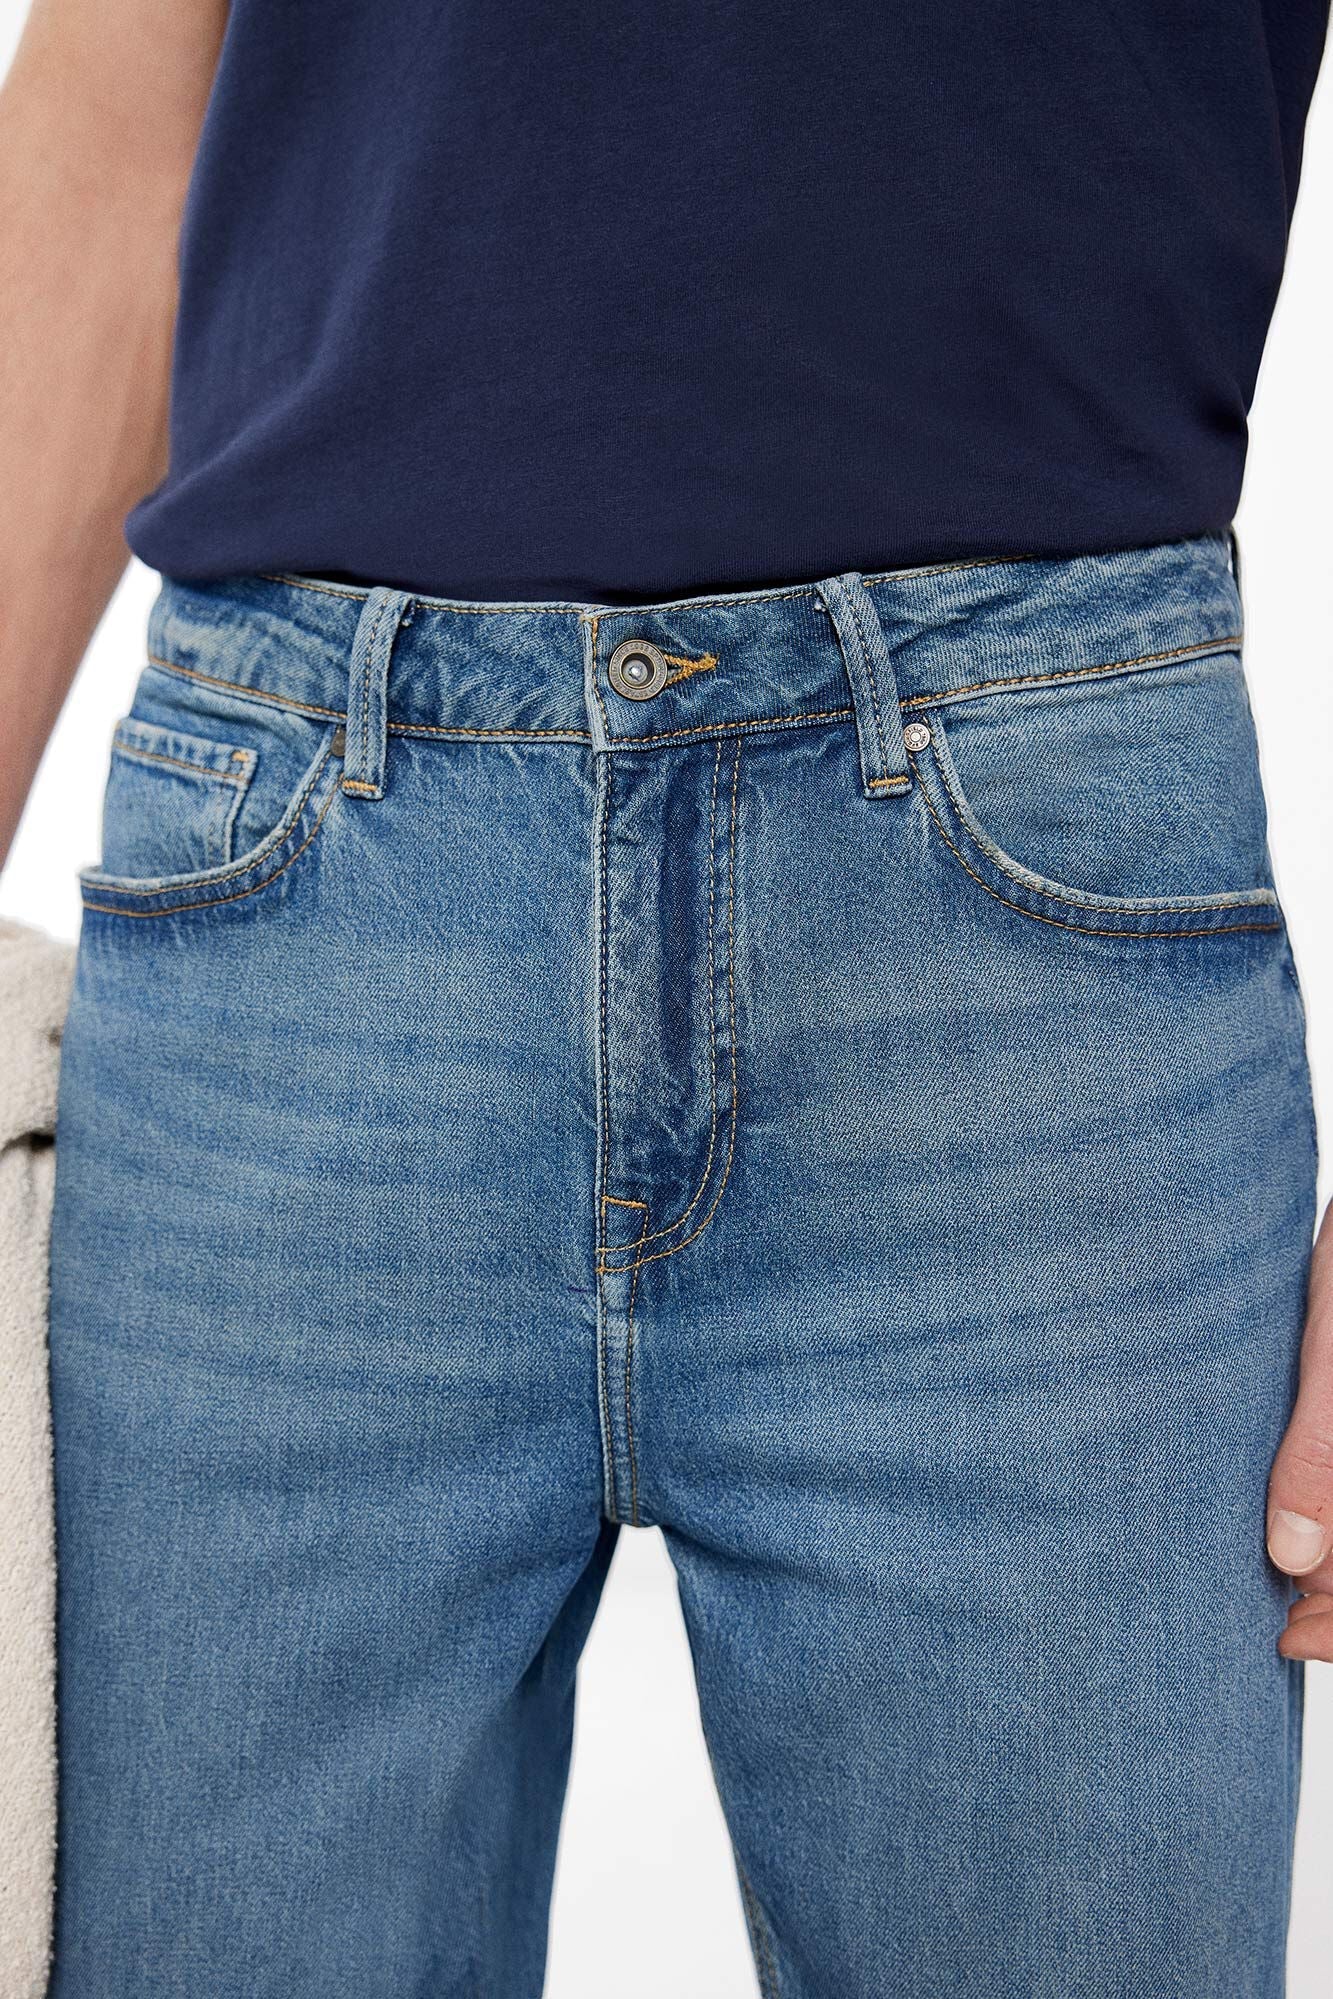 Medium-dark wash regular fit jeans